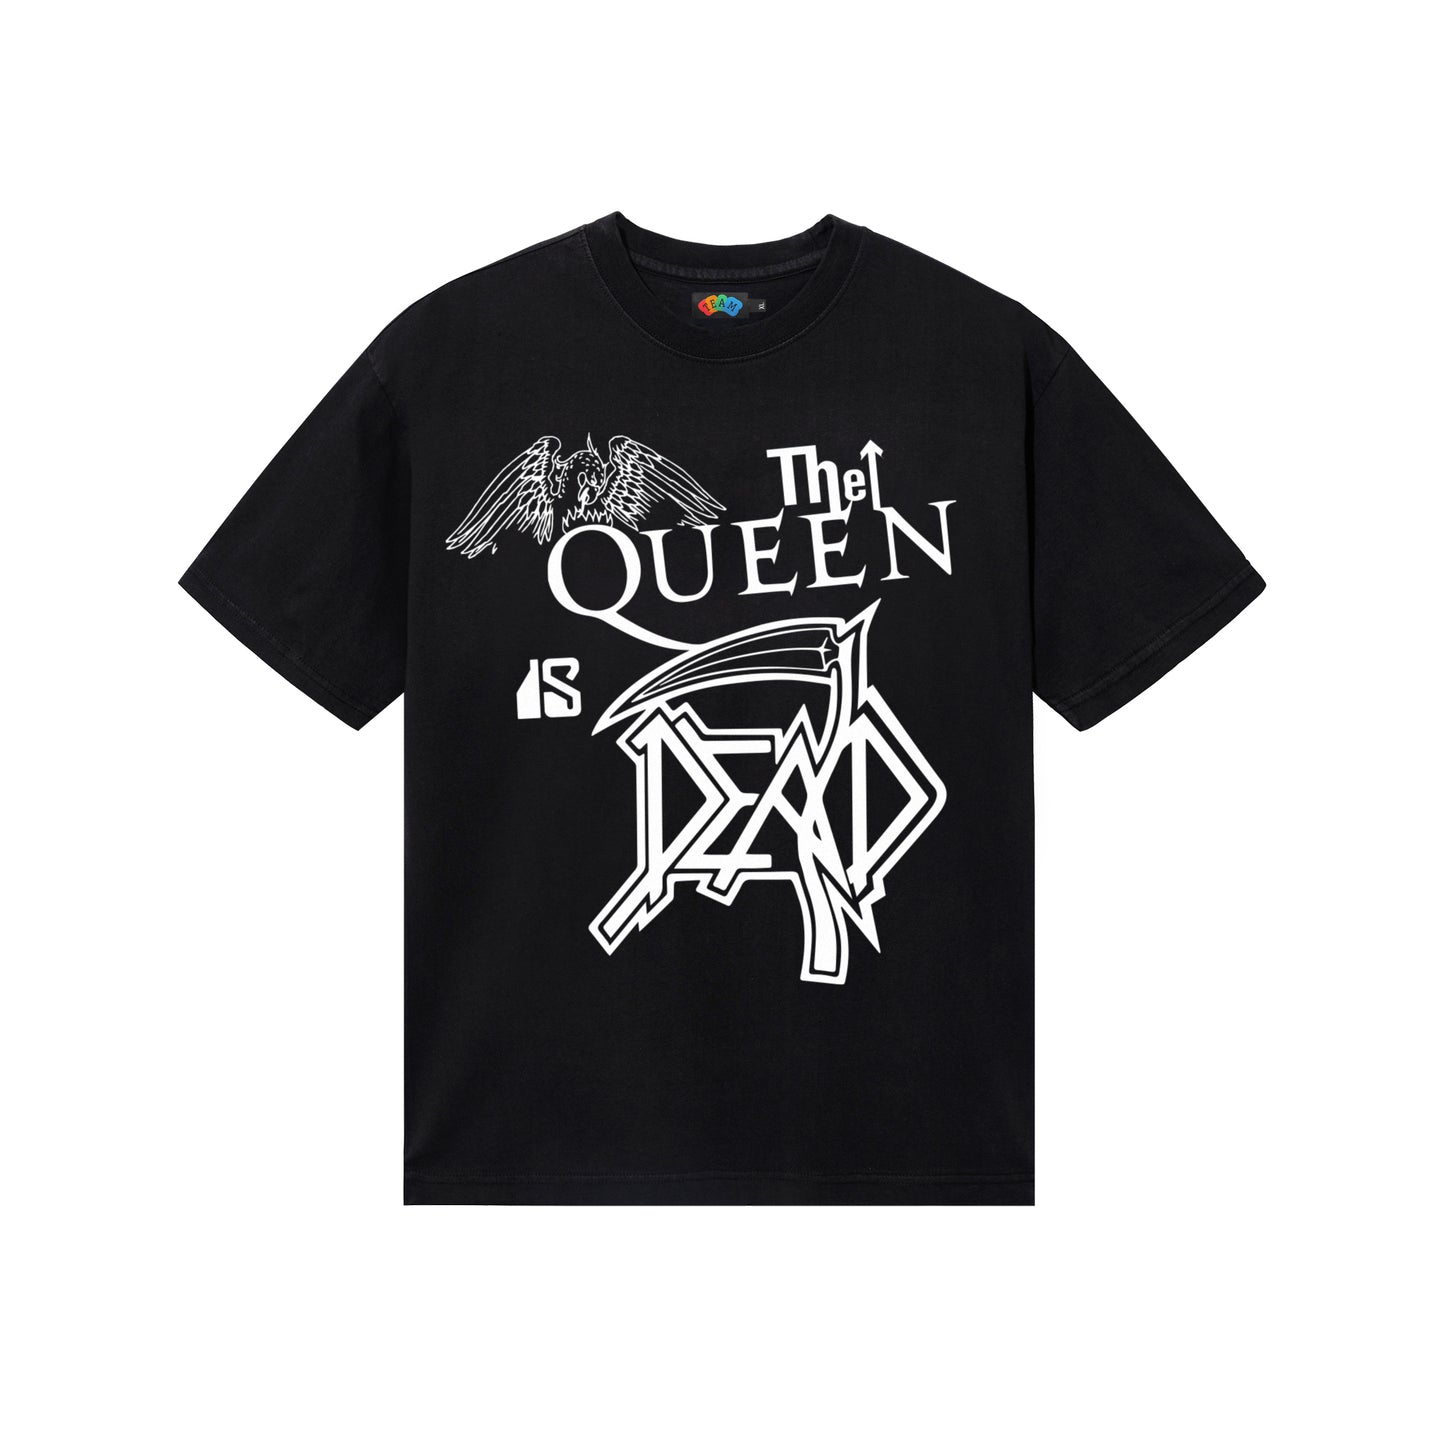 "The Queen Is Dead" T-Shirt